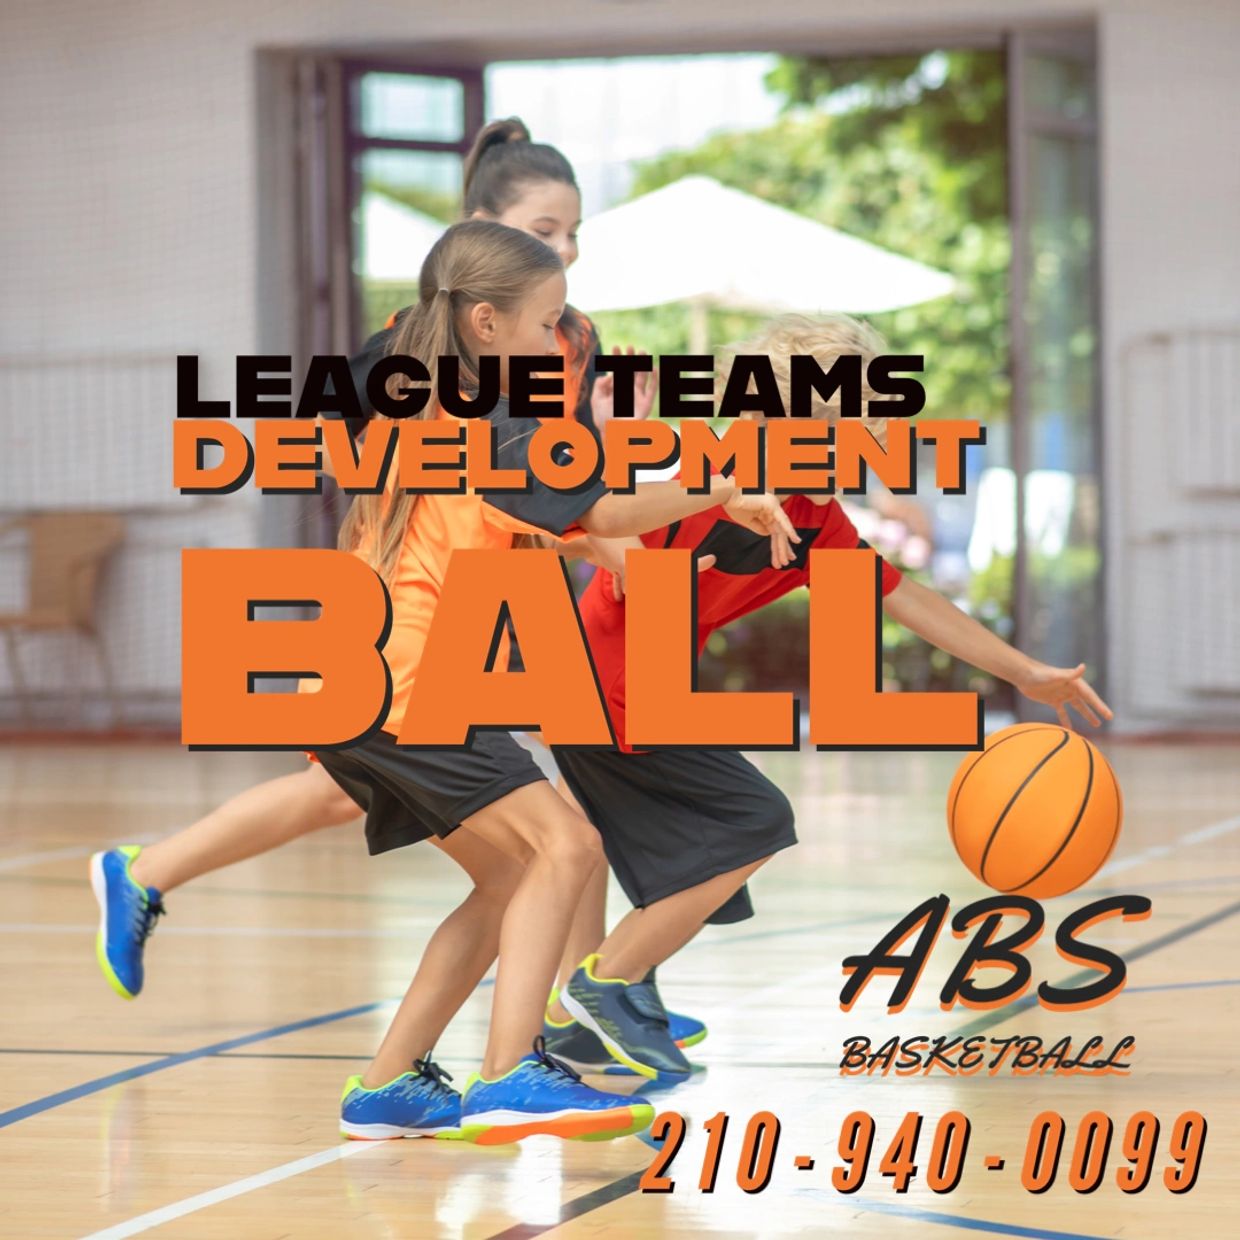 ABS Basketball Youth Teams and Training San Antonio TX 